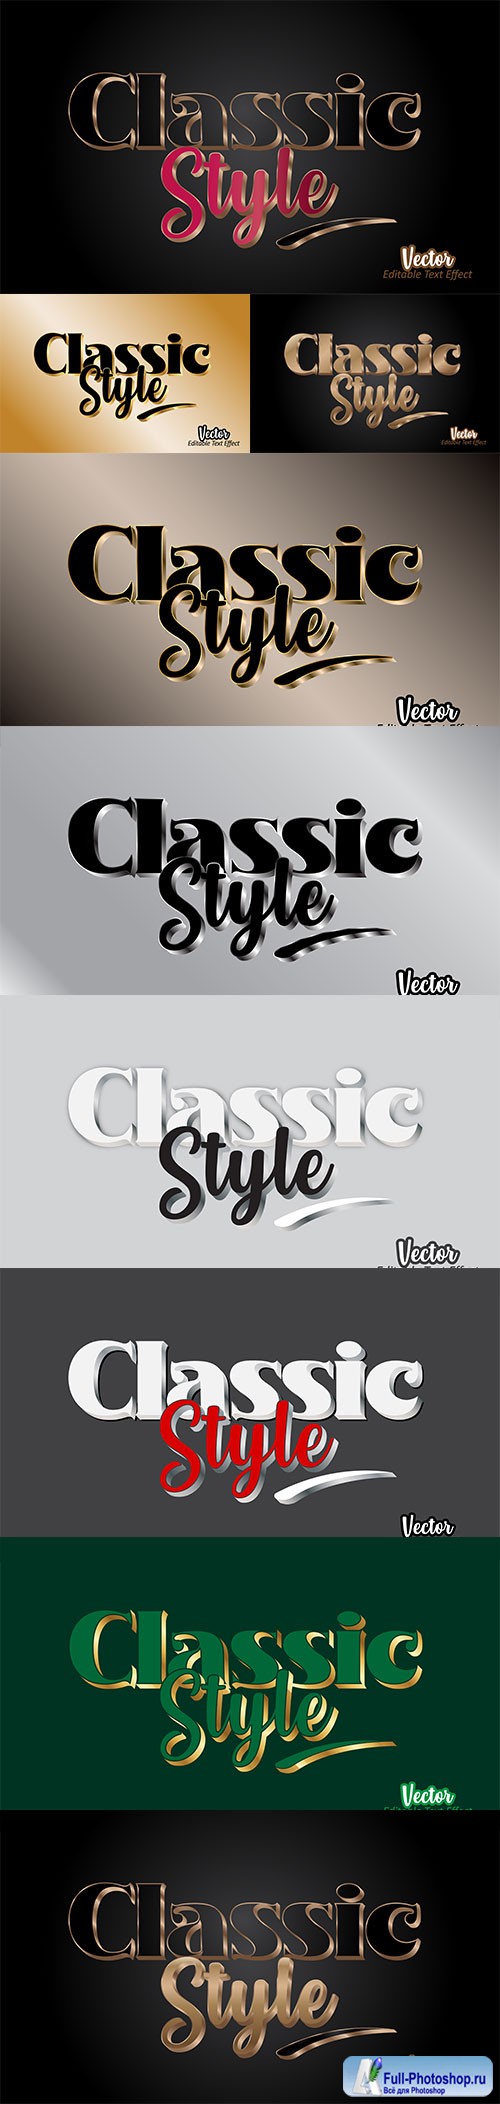 Editable classic style 3d text effect template premium vector